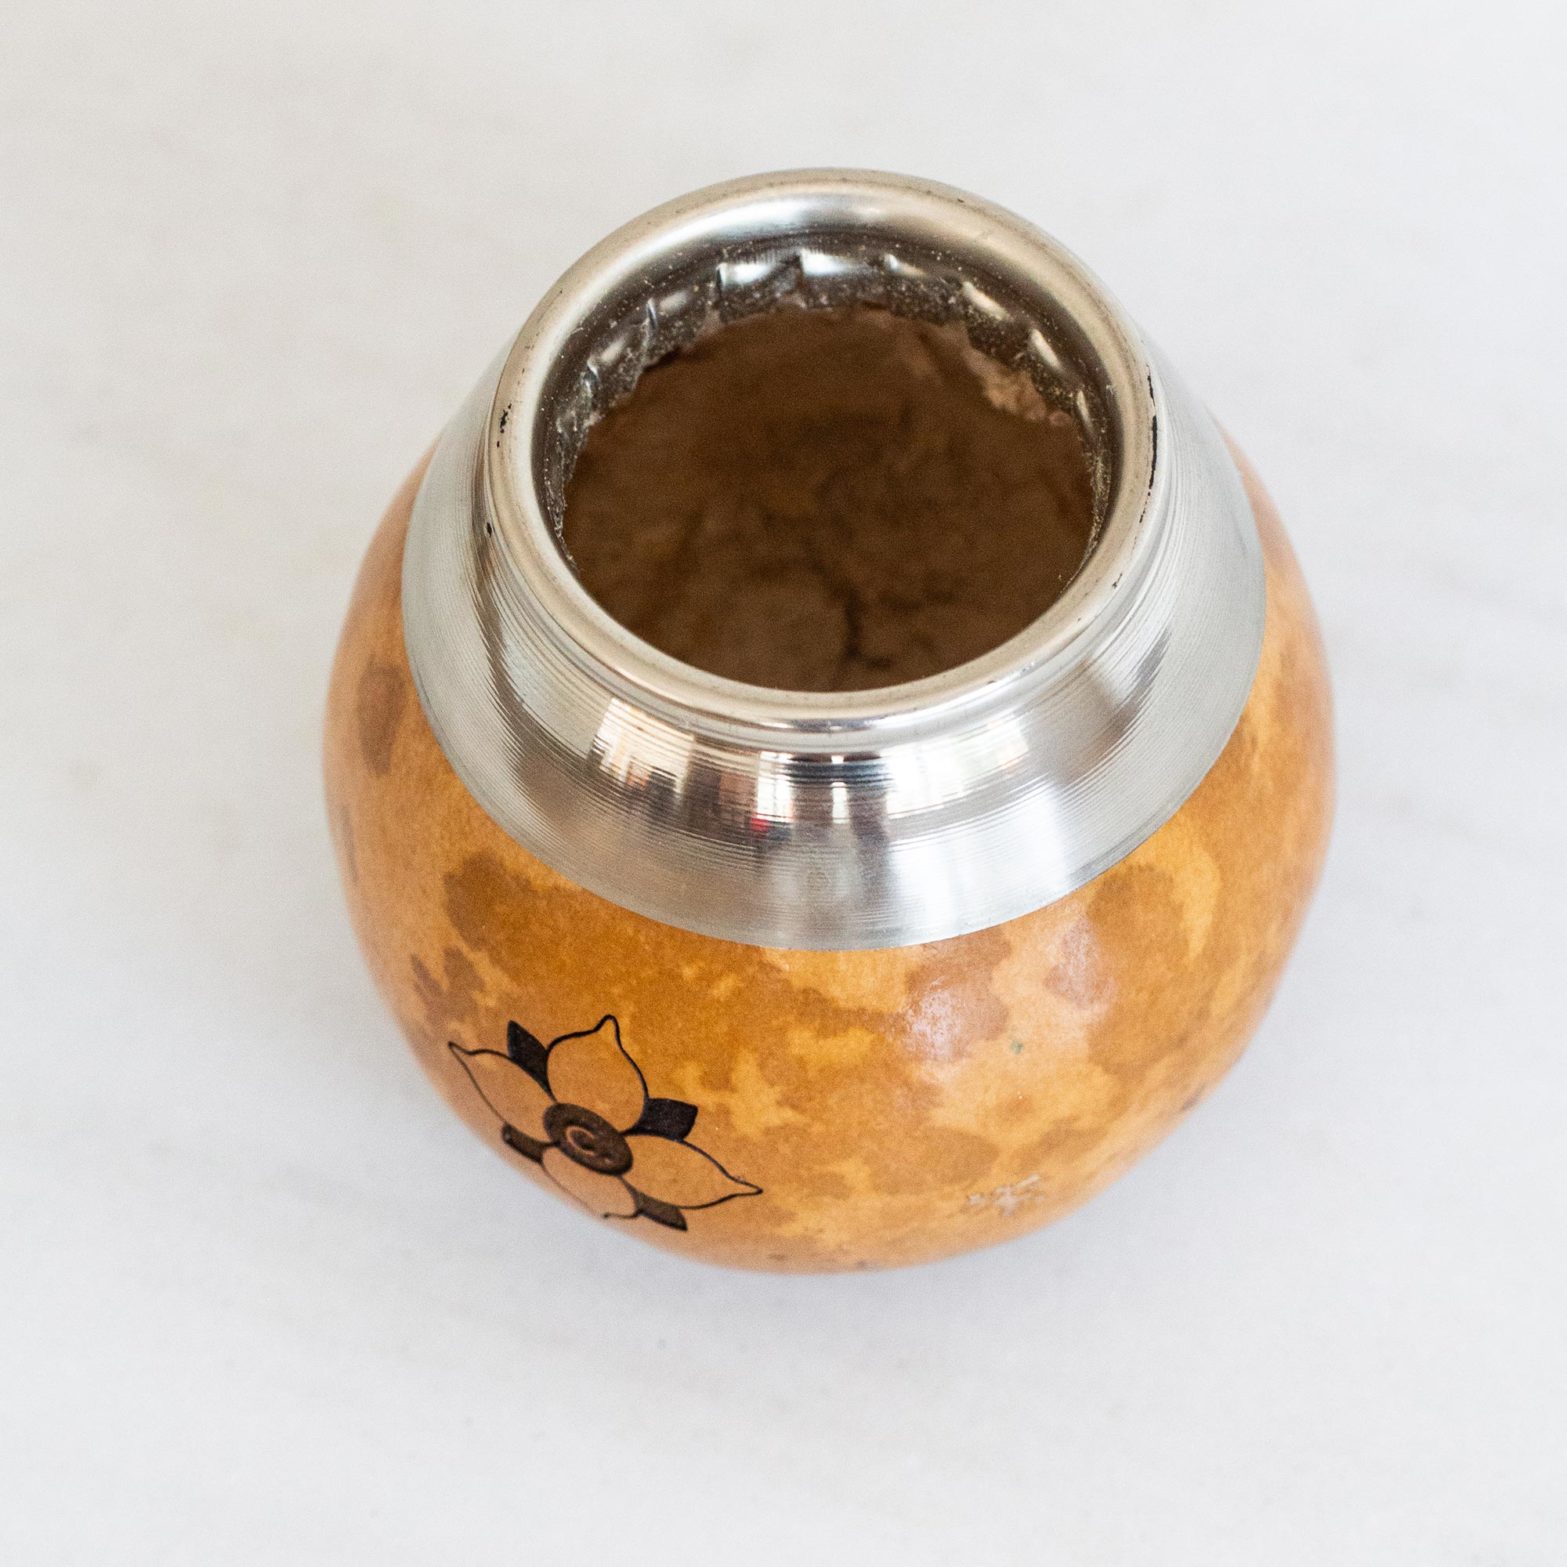 Sabi Cup Mate Flower – Calabash Yerba Mate Gourd